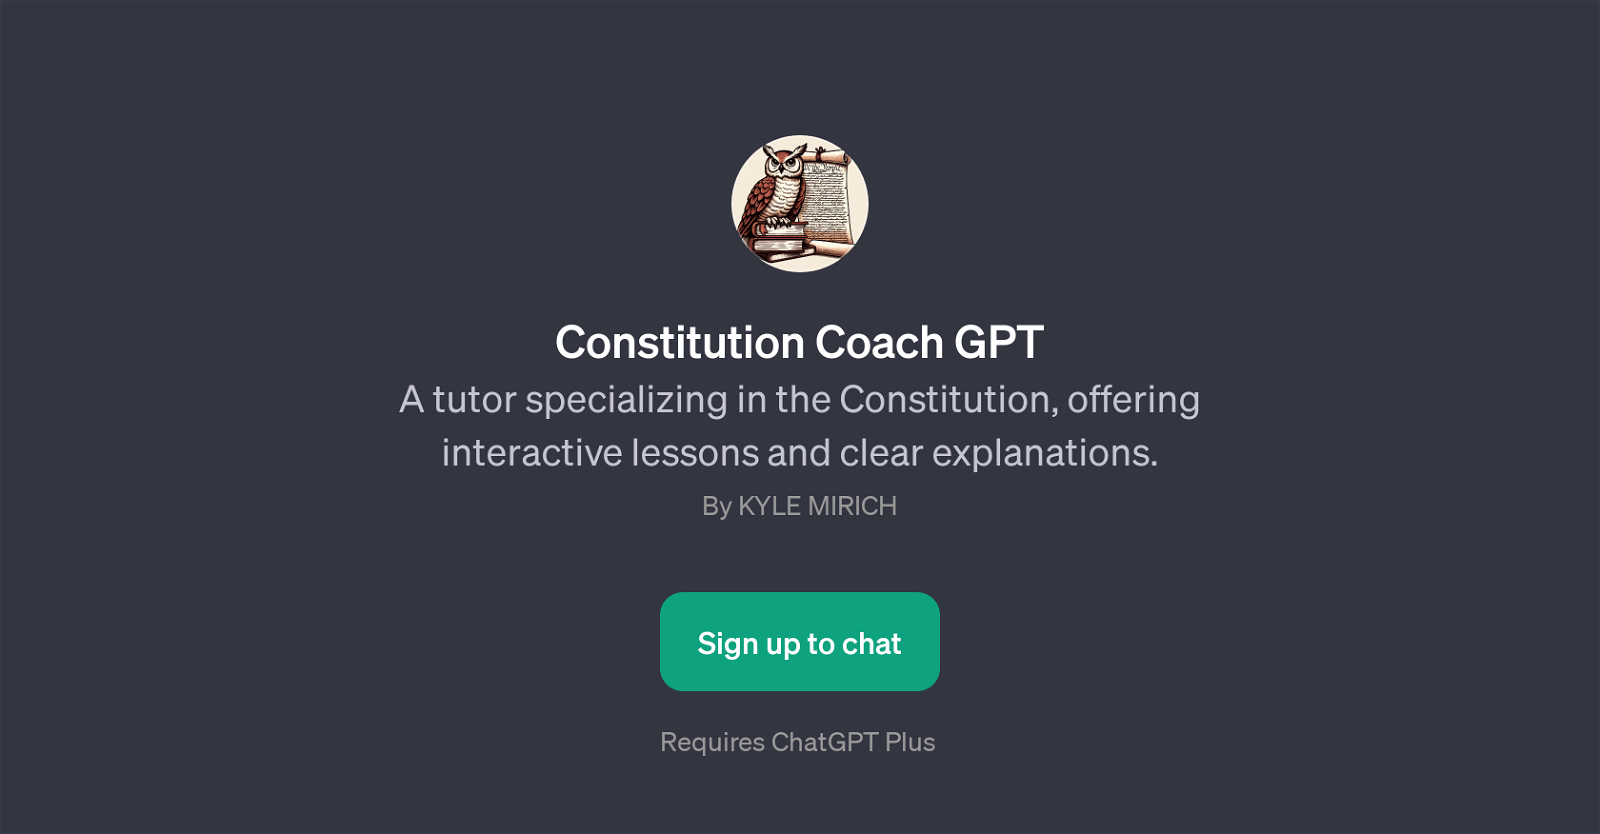 Constitution Coach GPT website